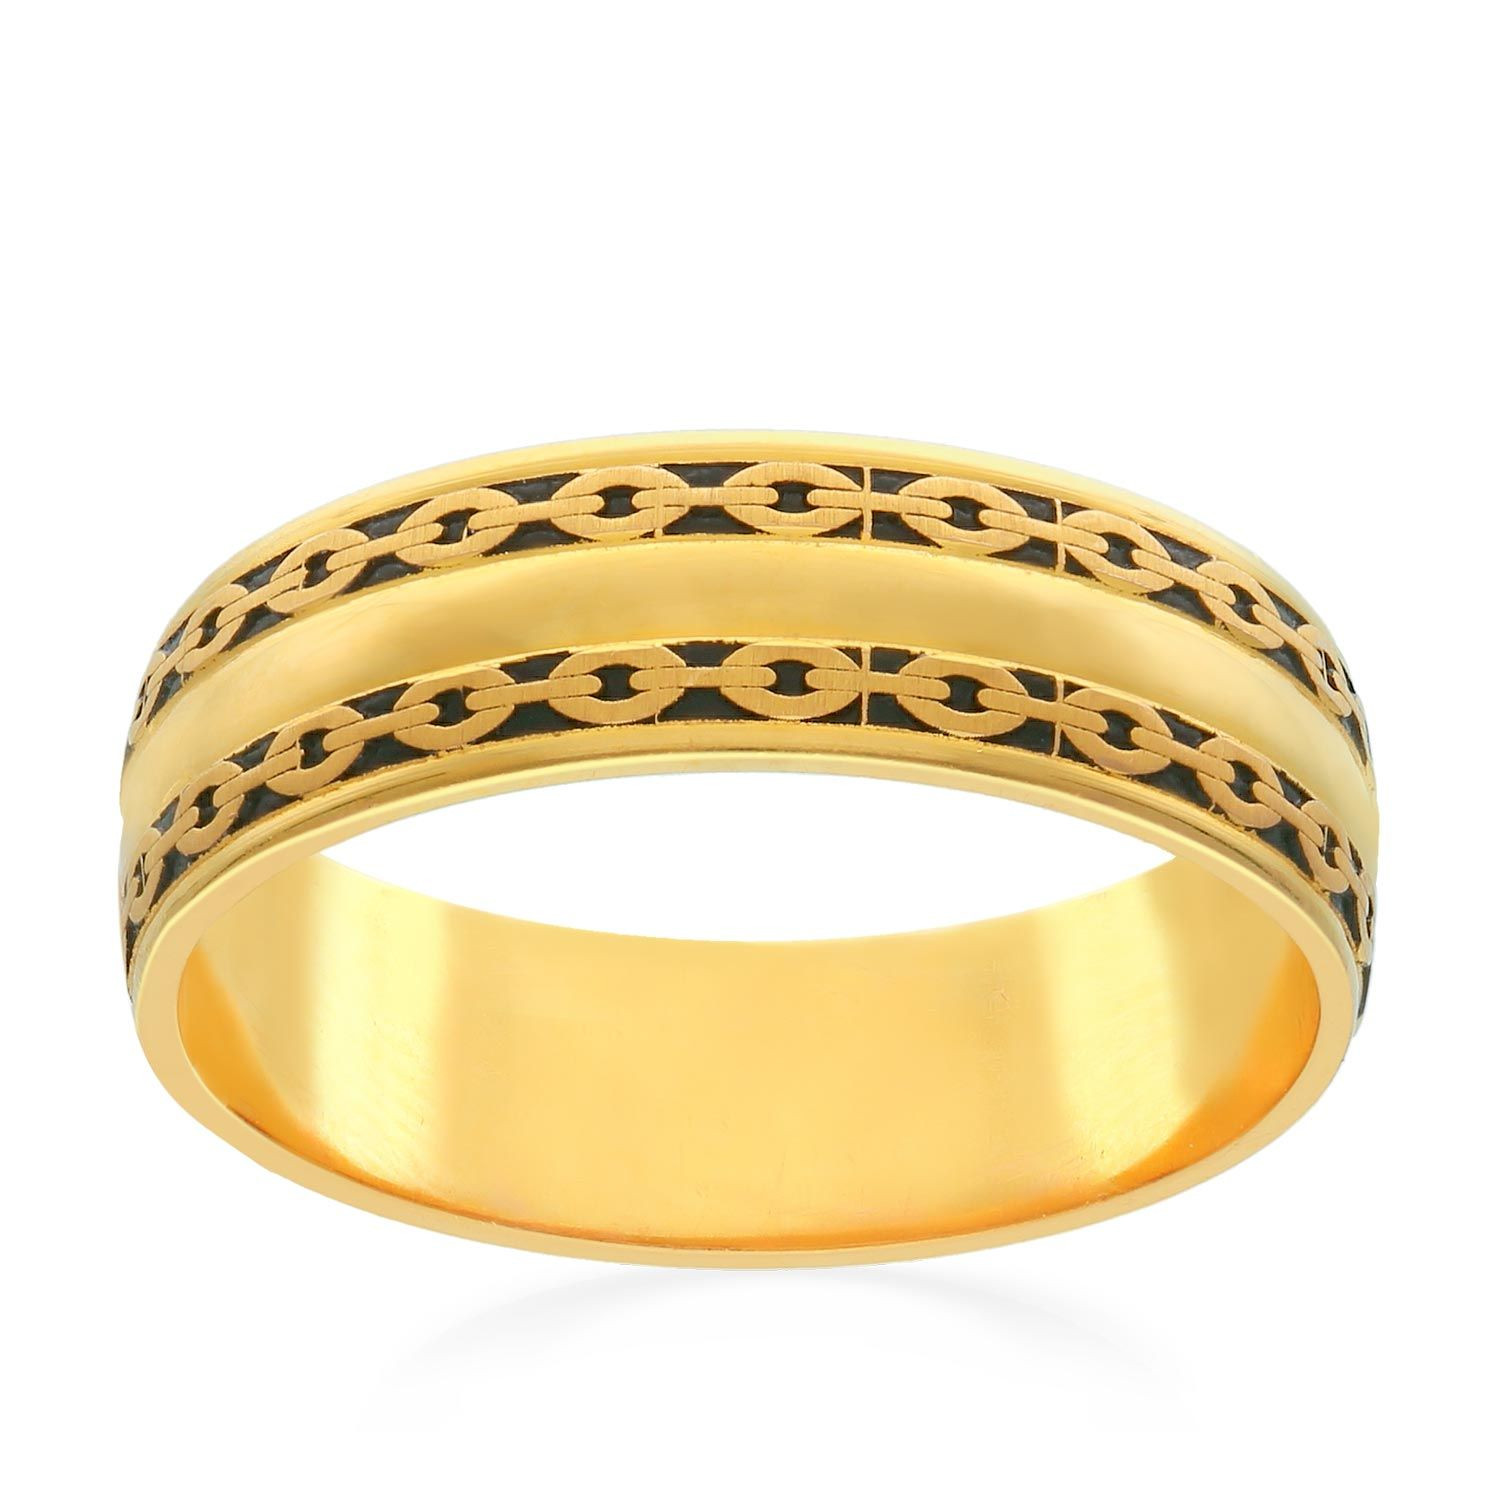 Buy Malabar Gold Ring ANDAAAAABQDC for Men Online | Malabar Gold & Diamonds